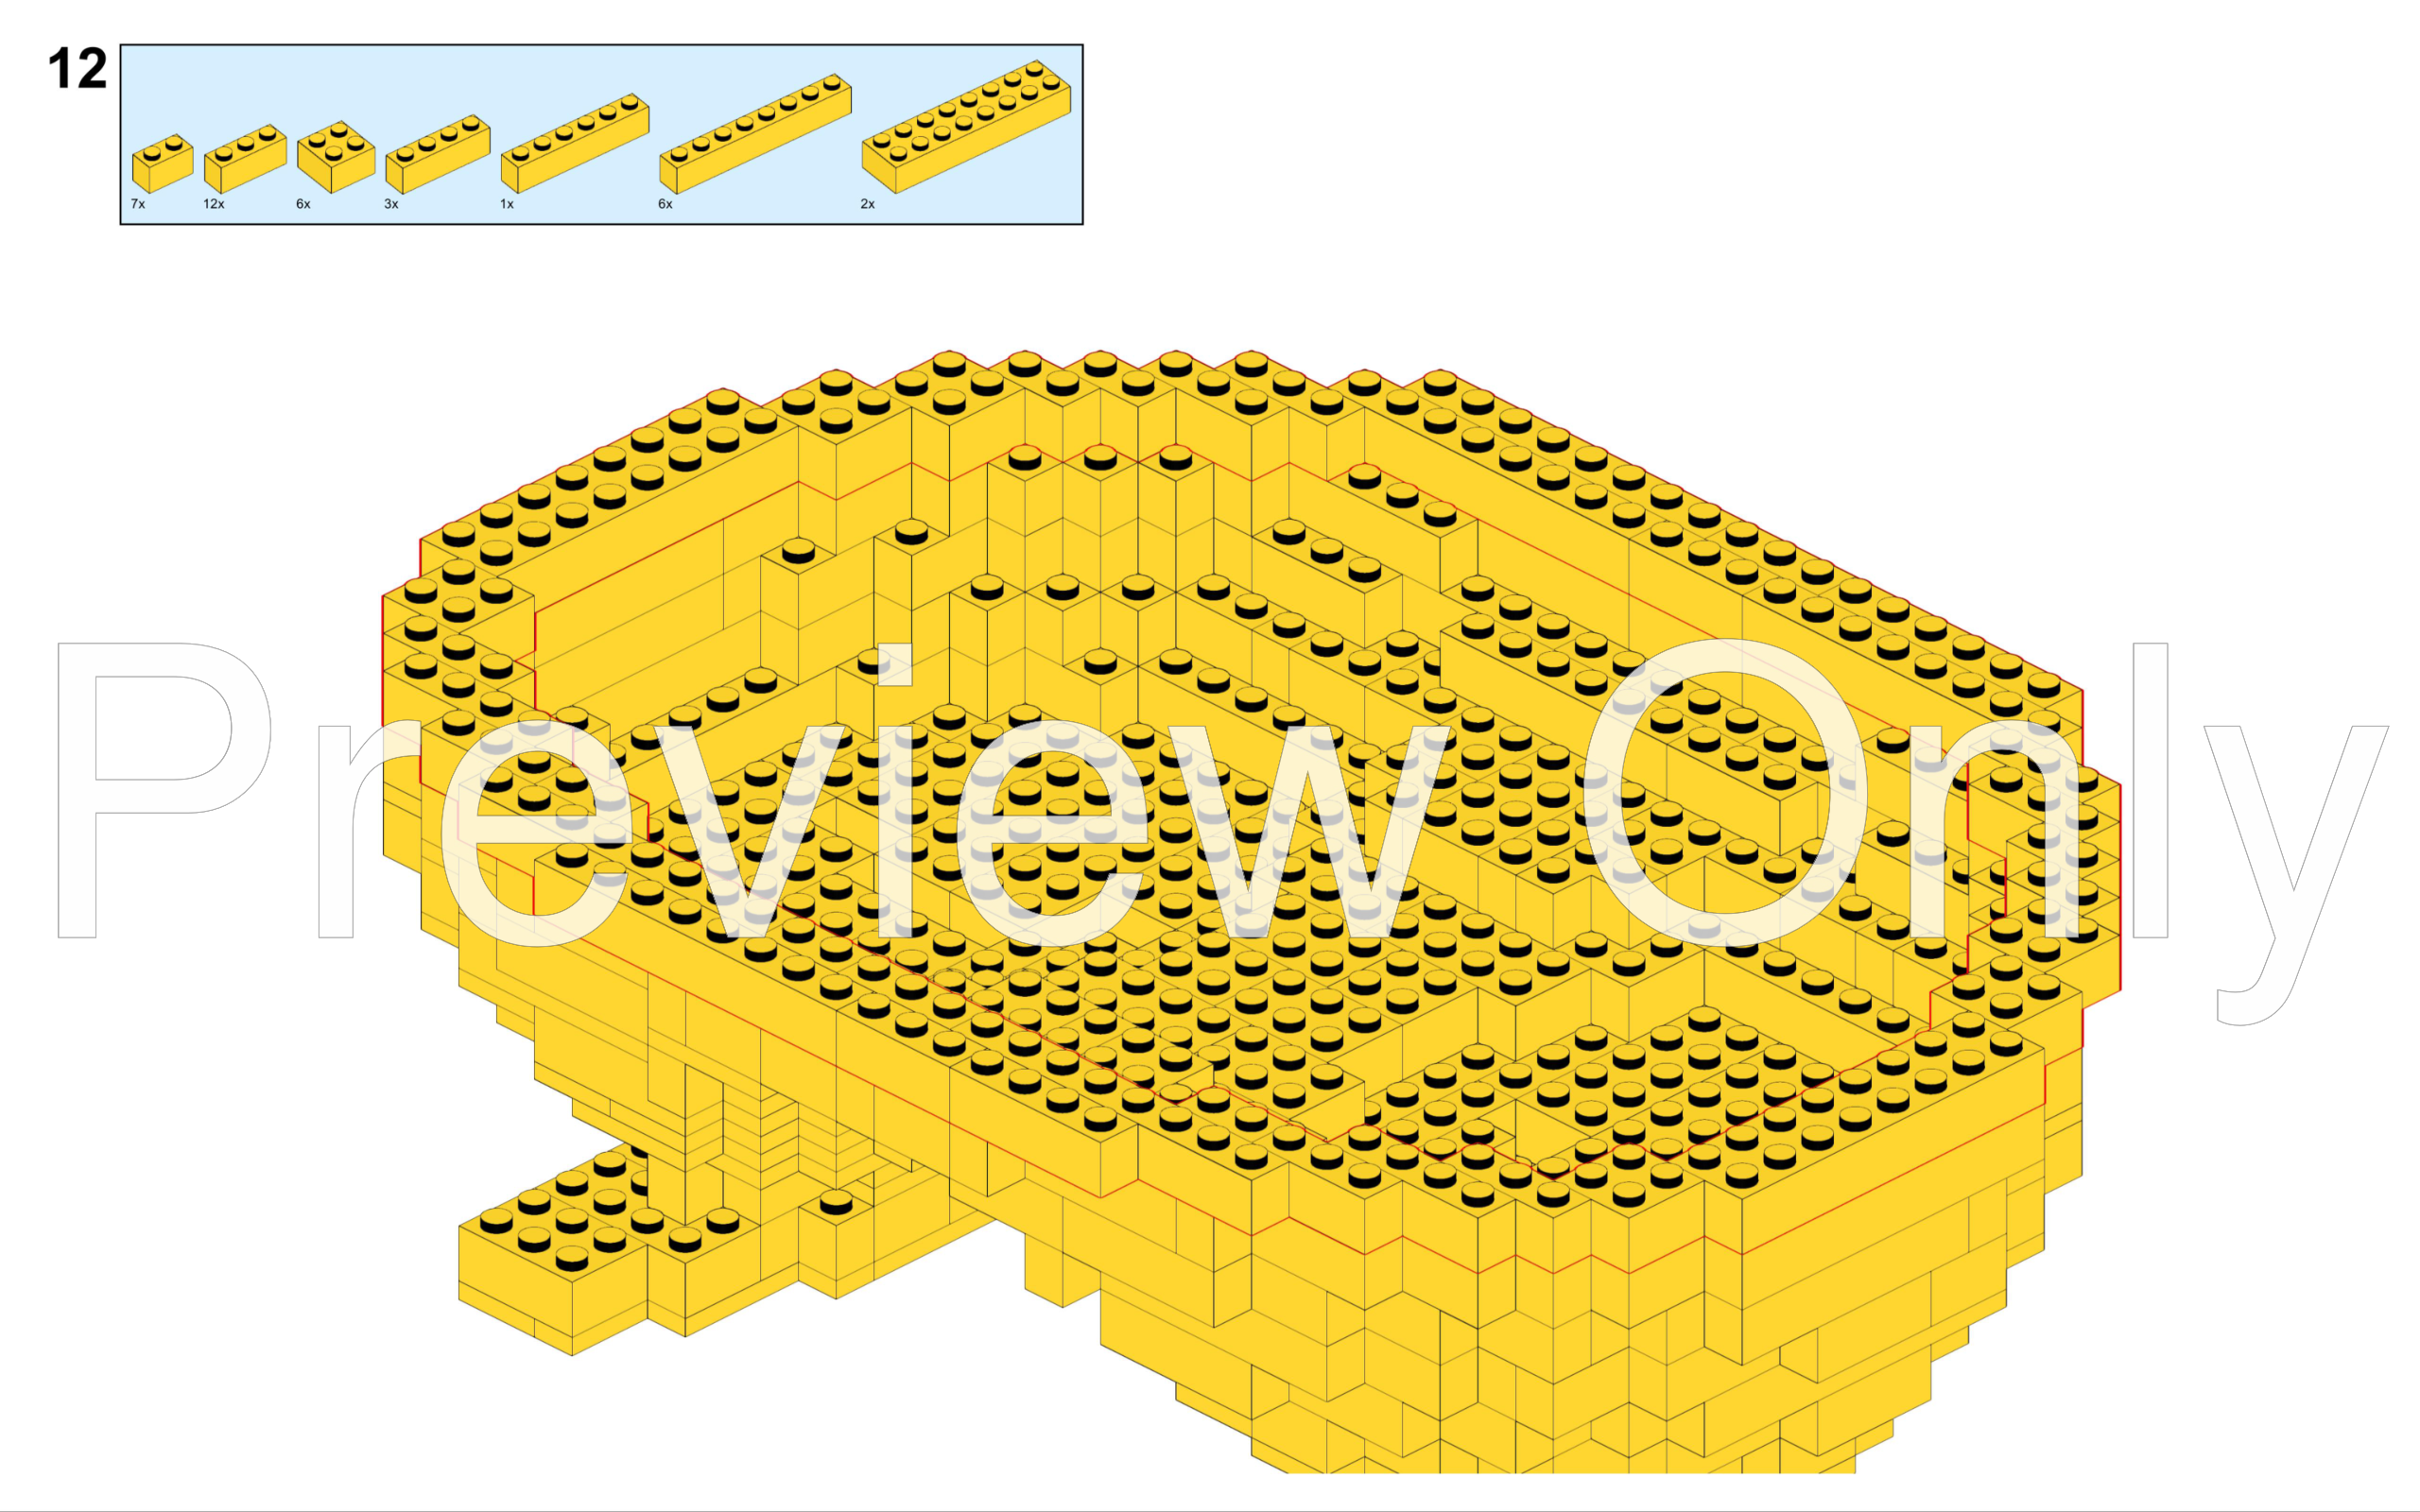 LEGO MOC Pikachu by bbchai  Rebrickable - Build with LEGO